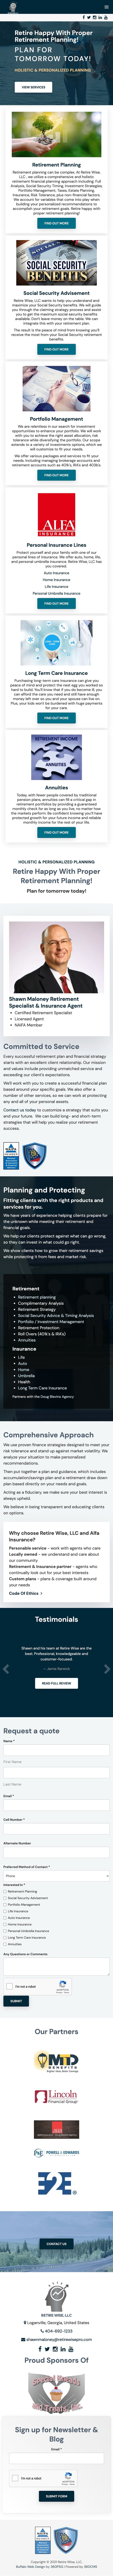 Retire Wise Pro Website - Mobile